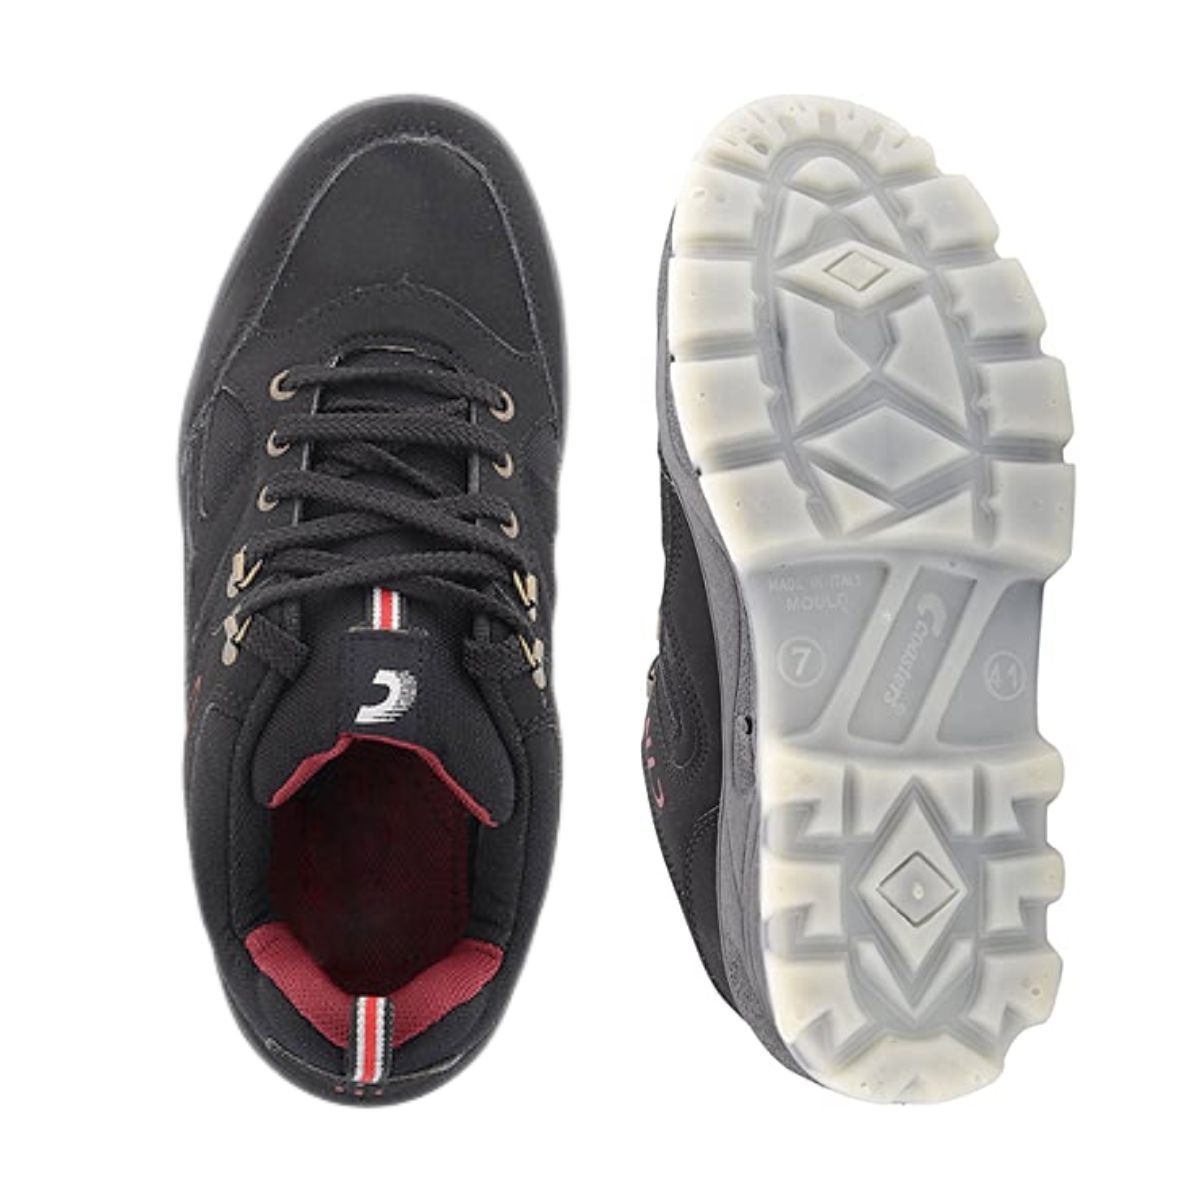 CTR CS208 coaster Canvas Sneaker  anti skid sole   Ctr Shoe Shop